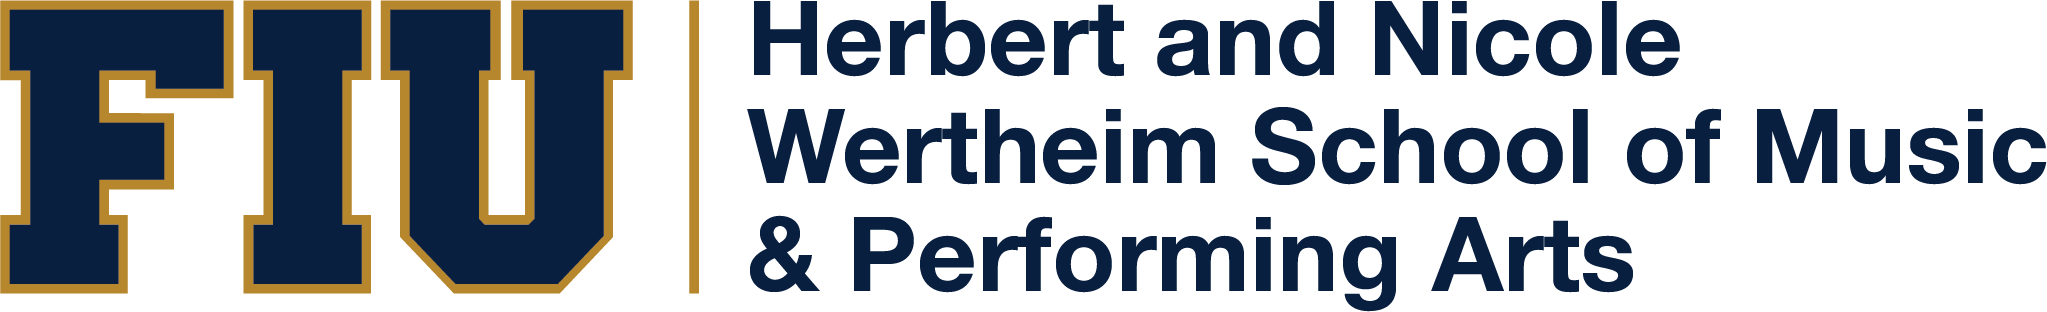 Herbert and Nicole Wertheim School of Music & Performing Arts Logo